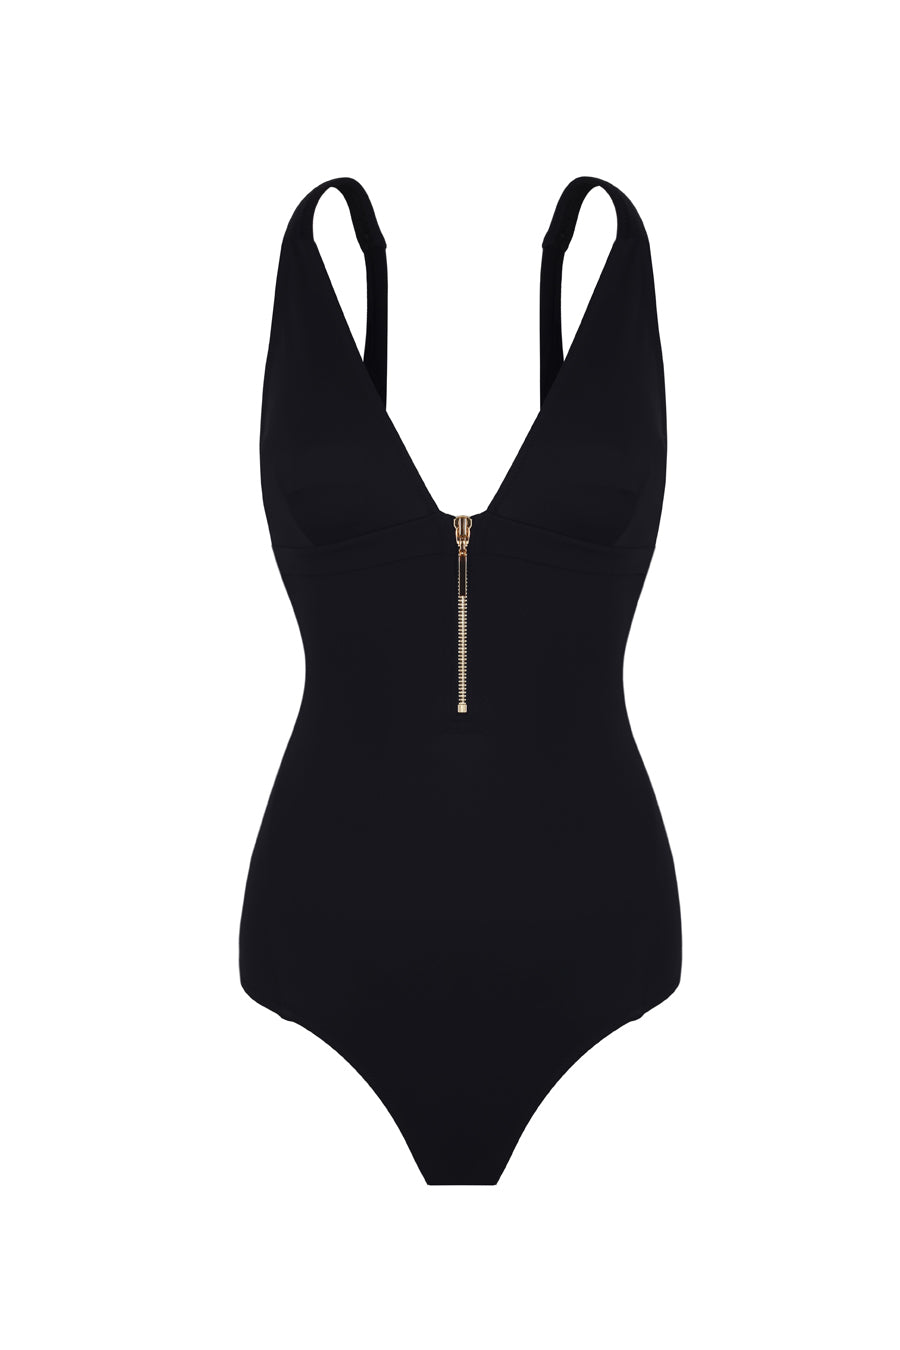 Noelle Black Swimsuit